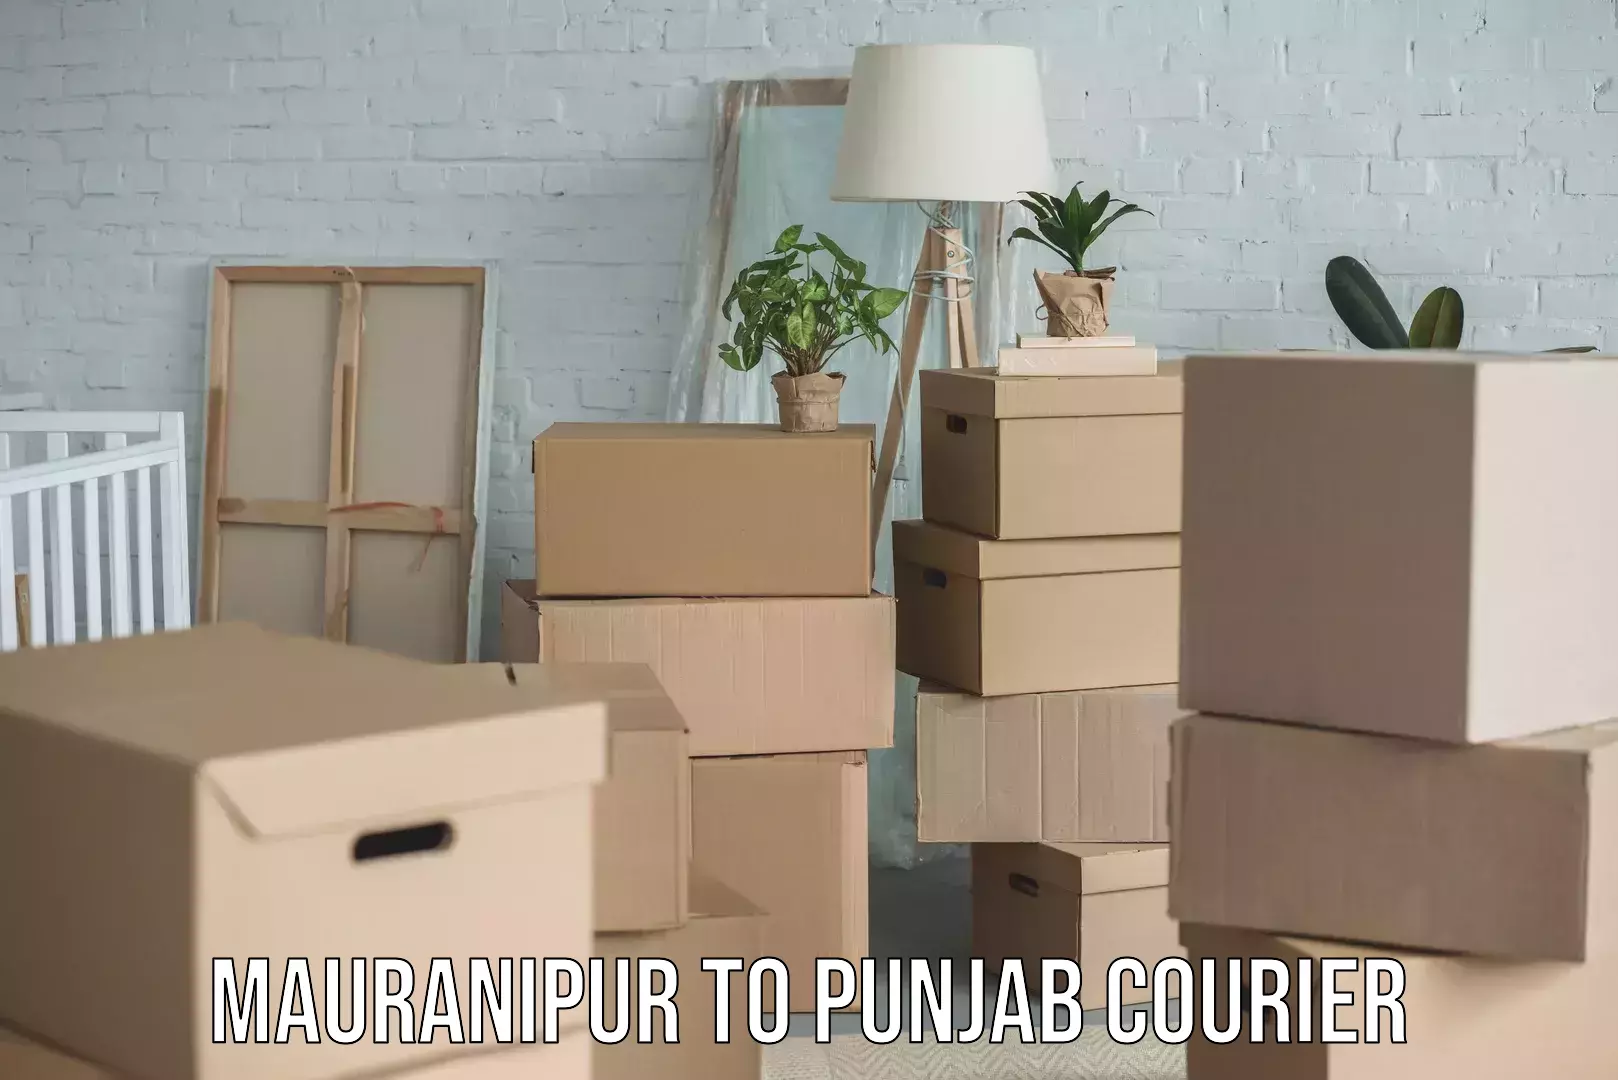 Household moving experts Mauranipur to Punjab